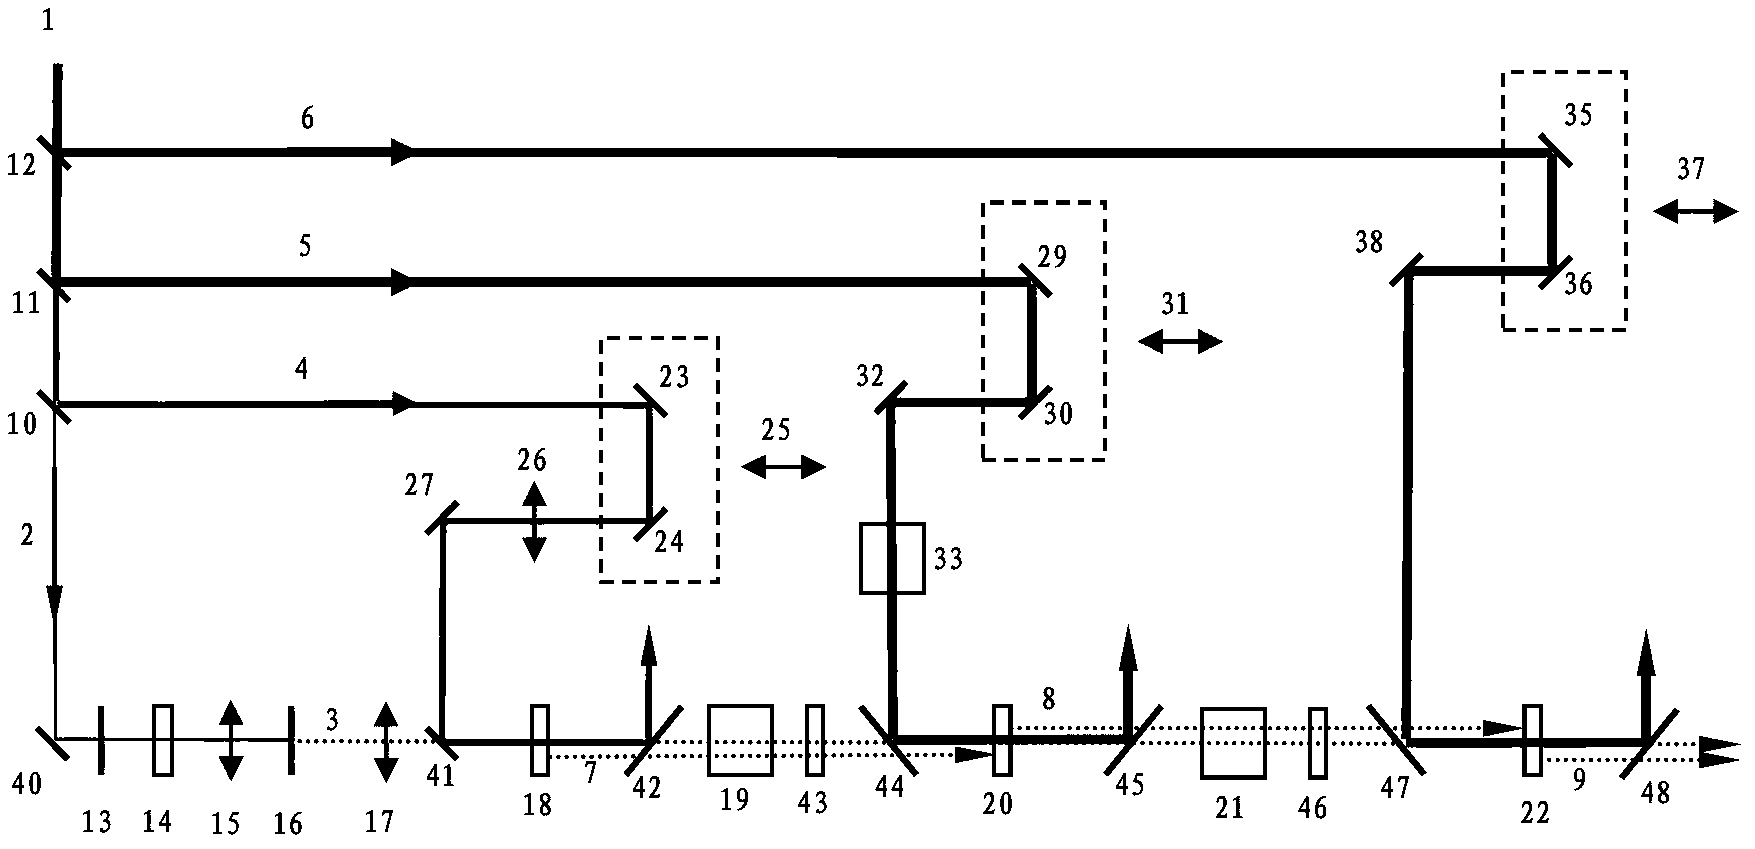 Femtosecond optical parameter amplifier